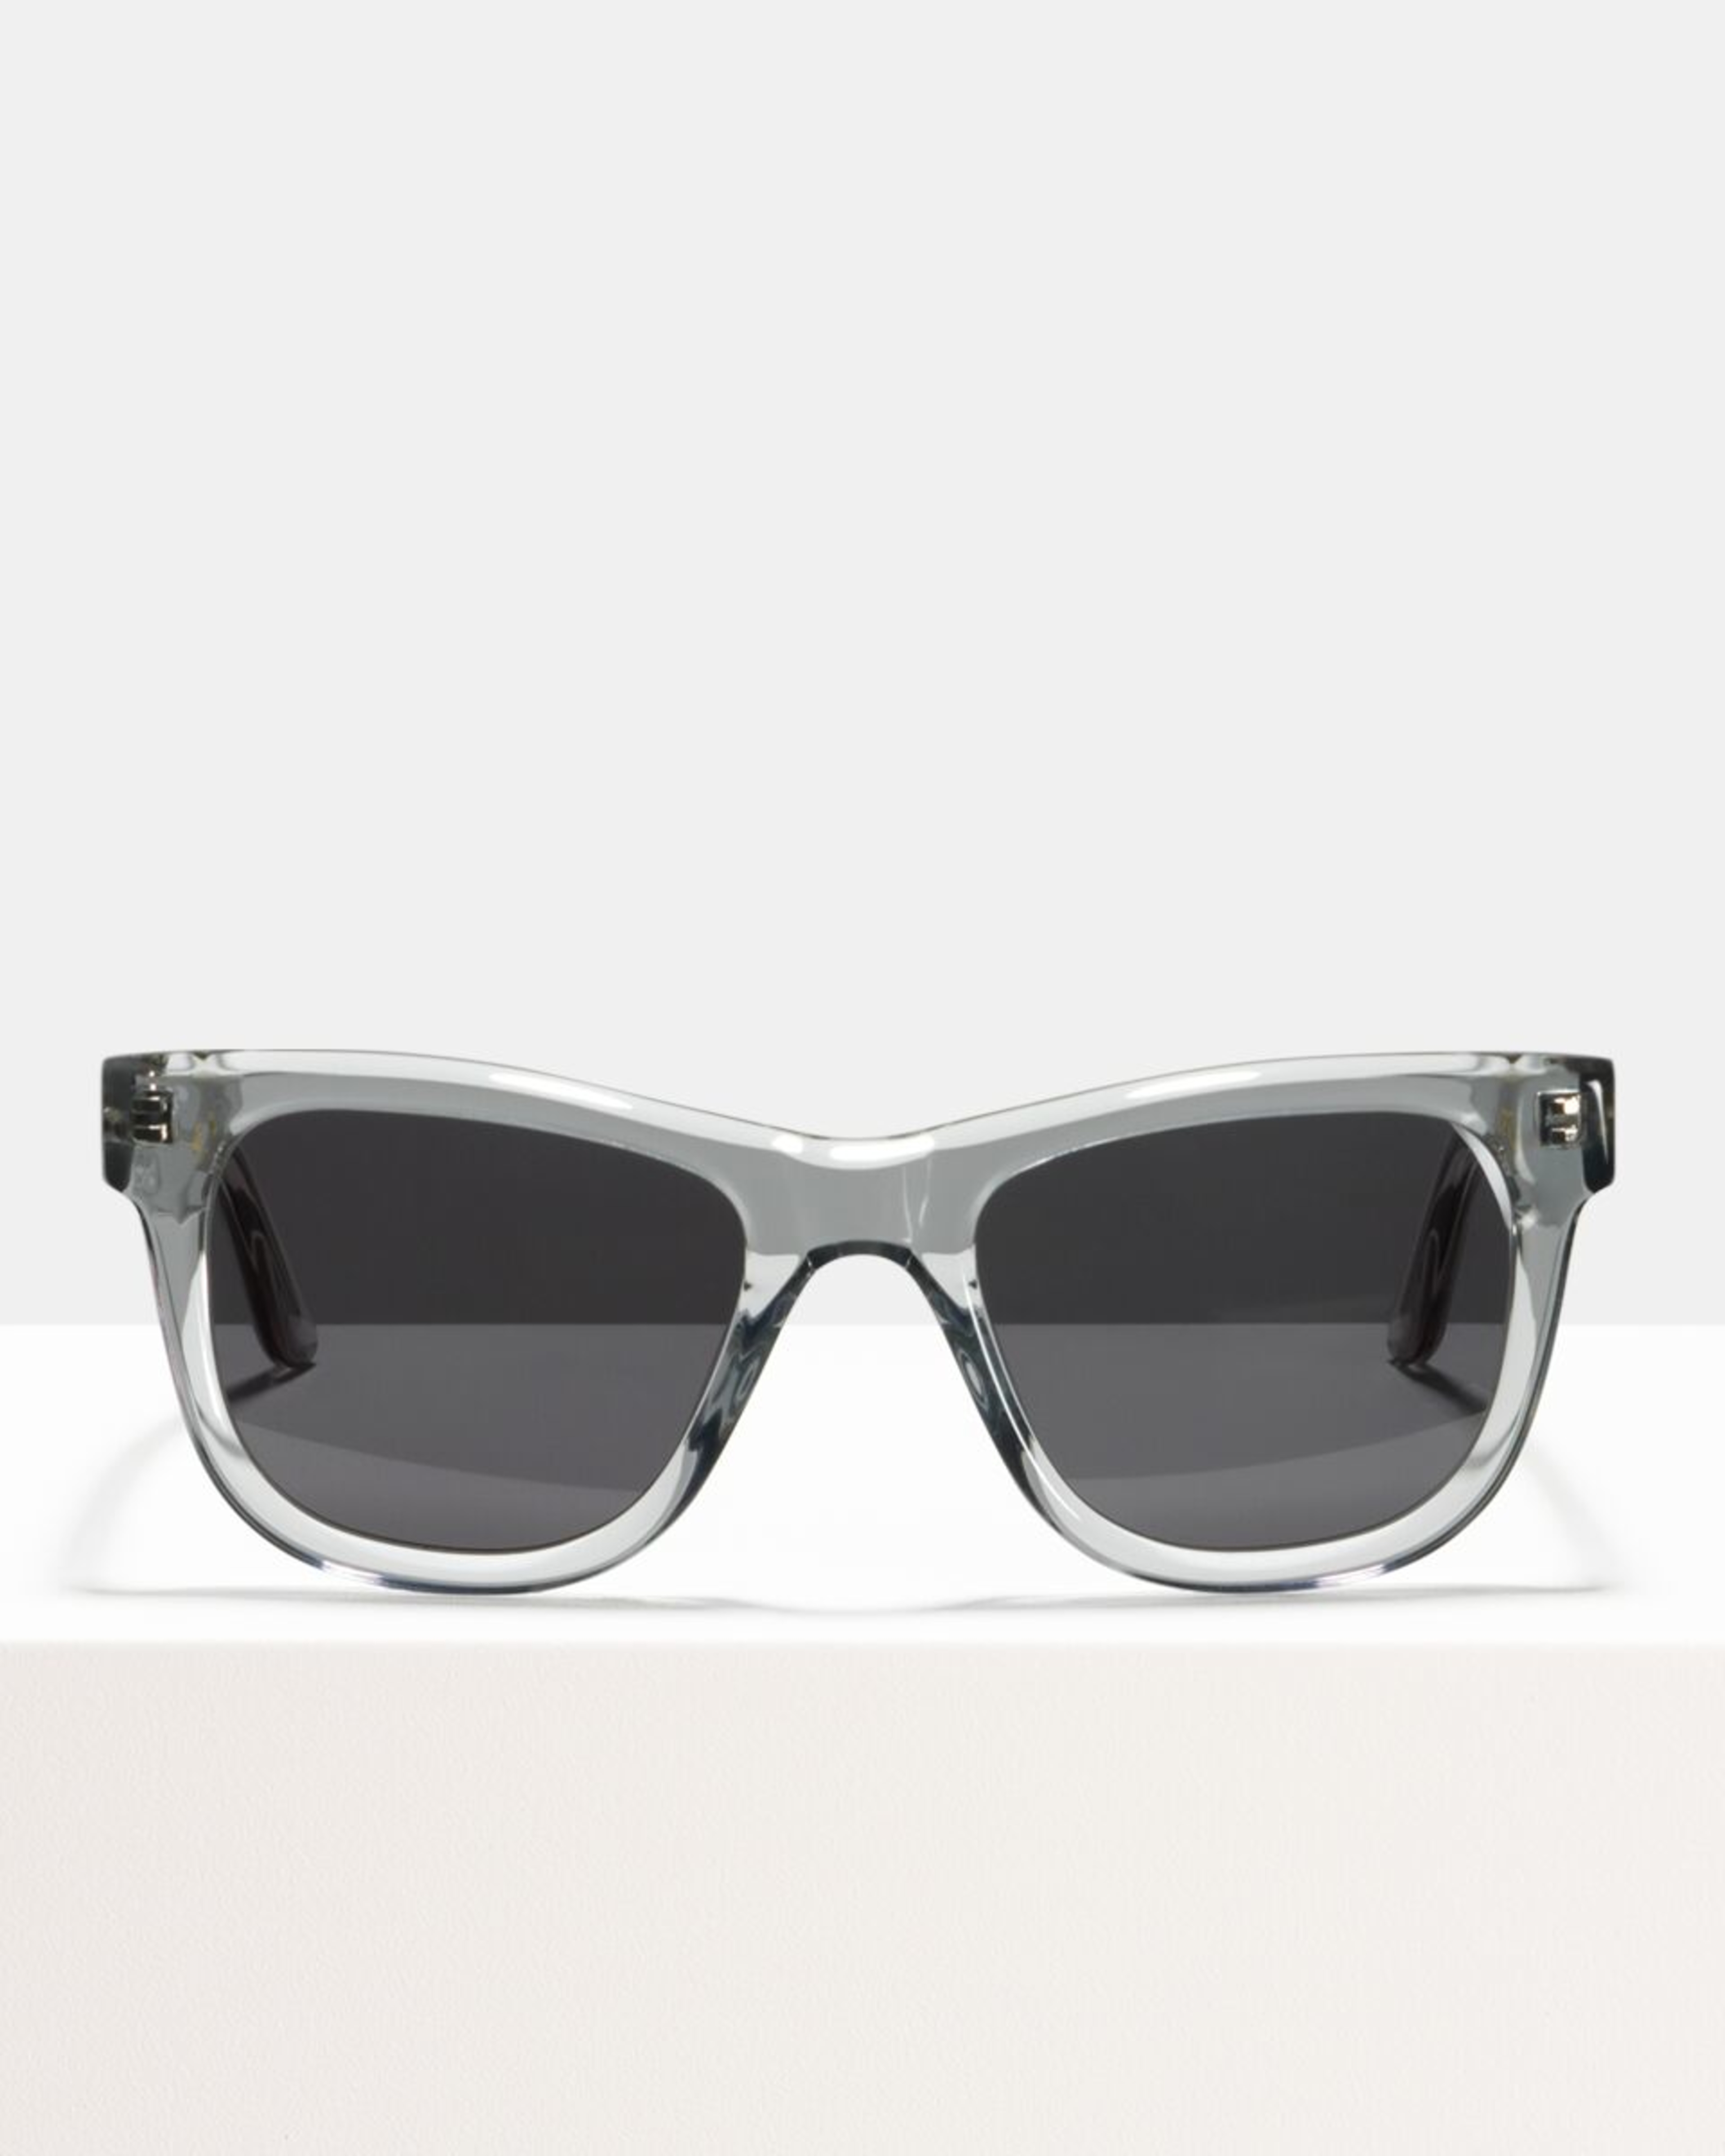 Ace & Tate Sunglasses | rechteckig Acetat in Grau